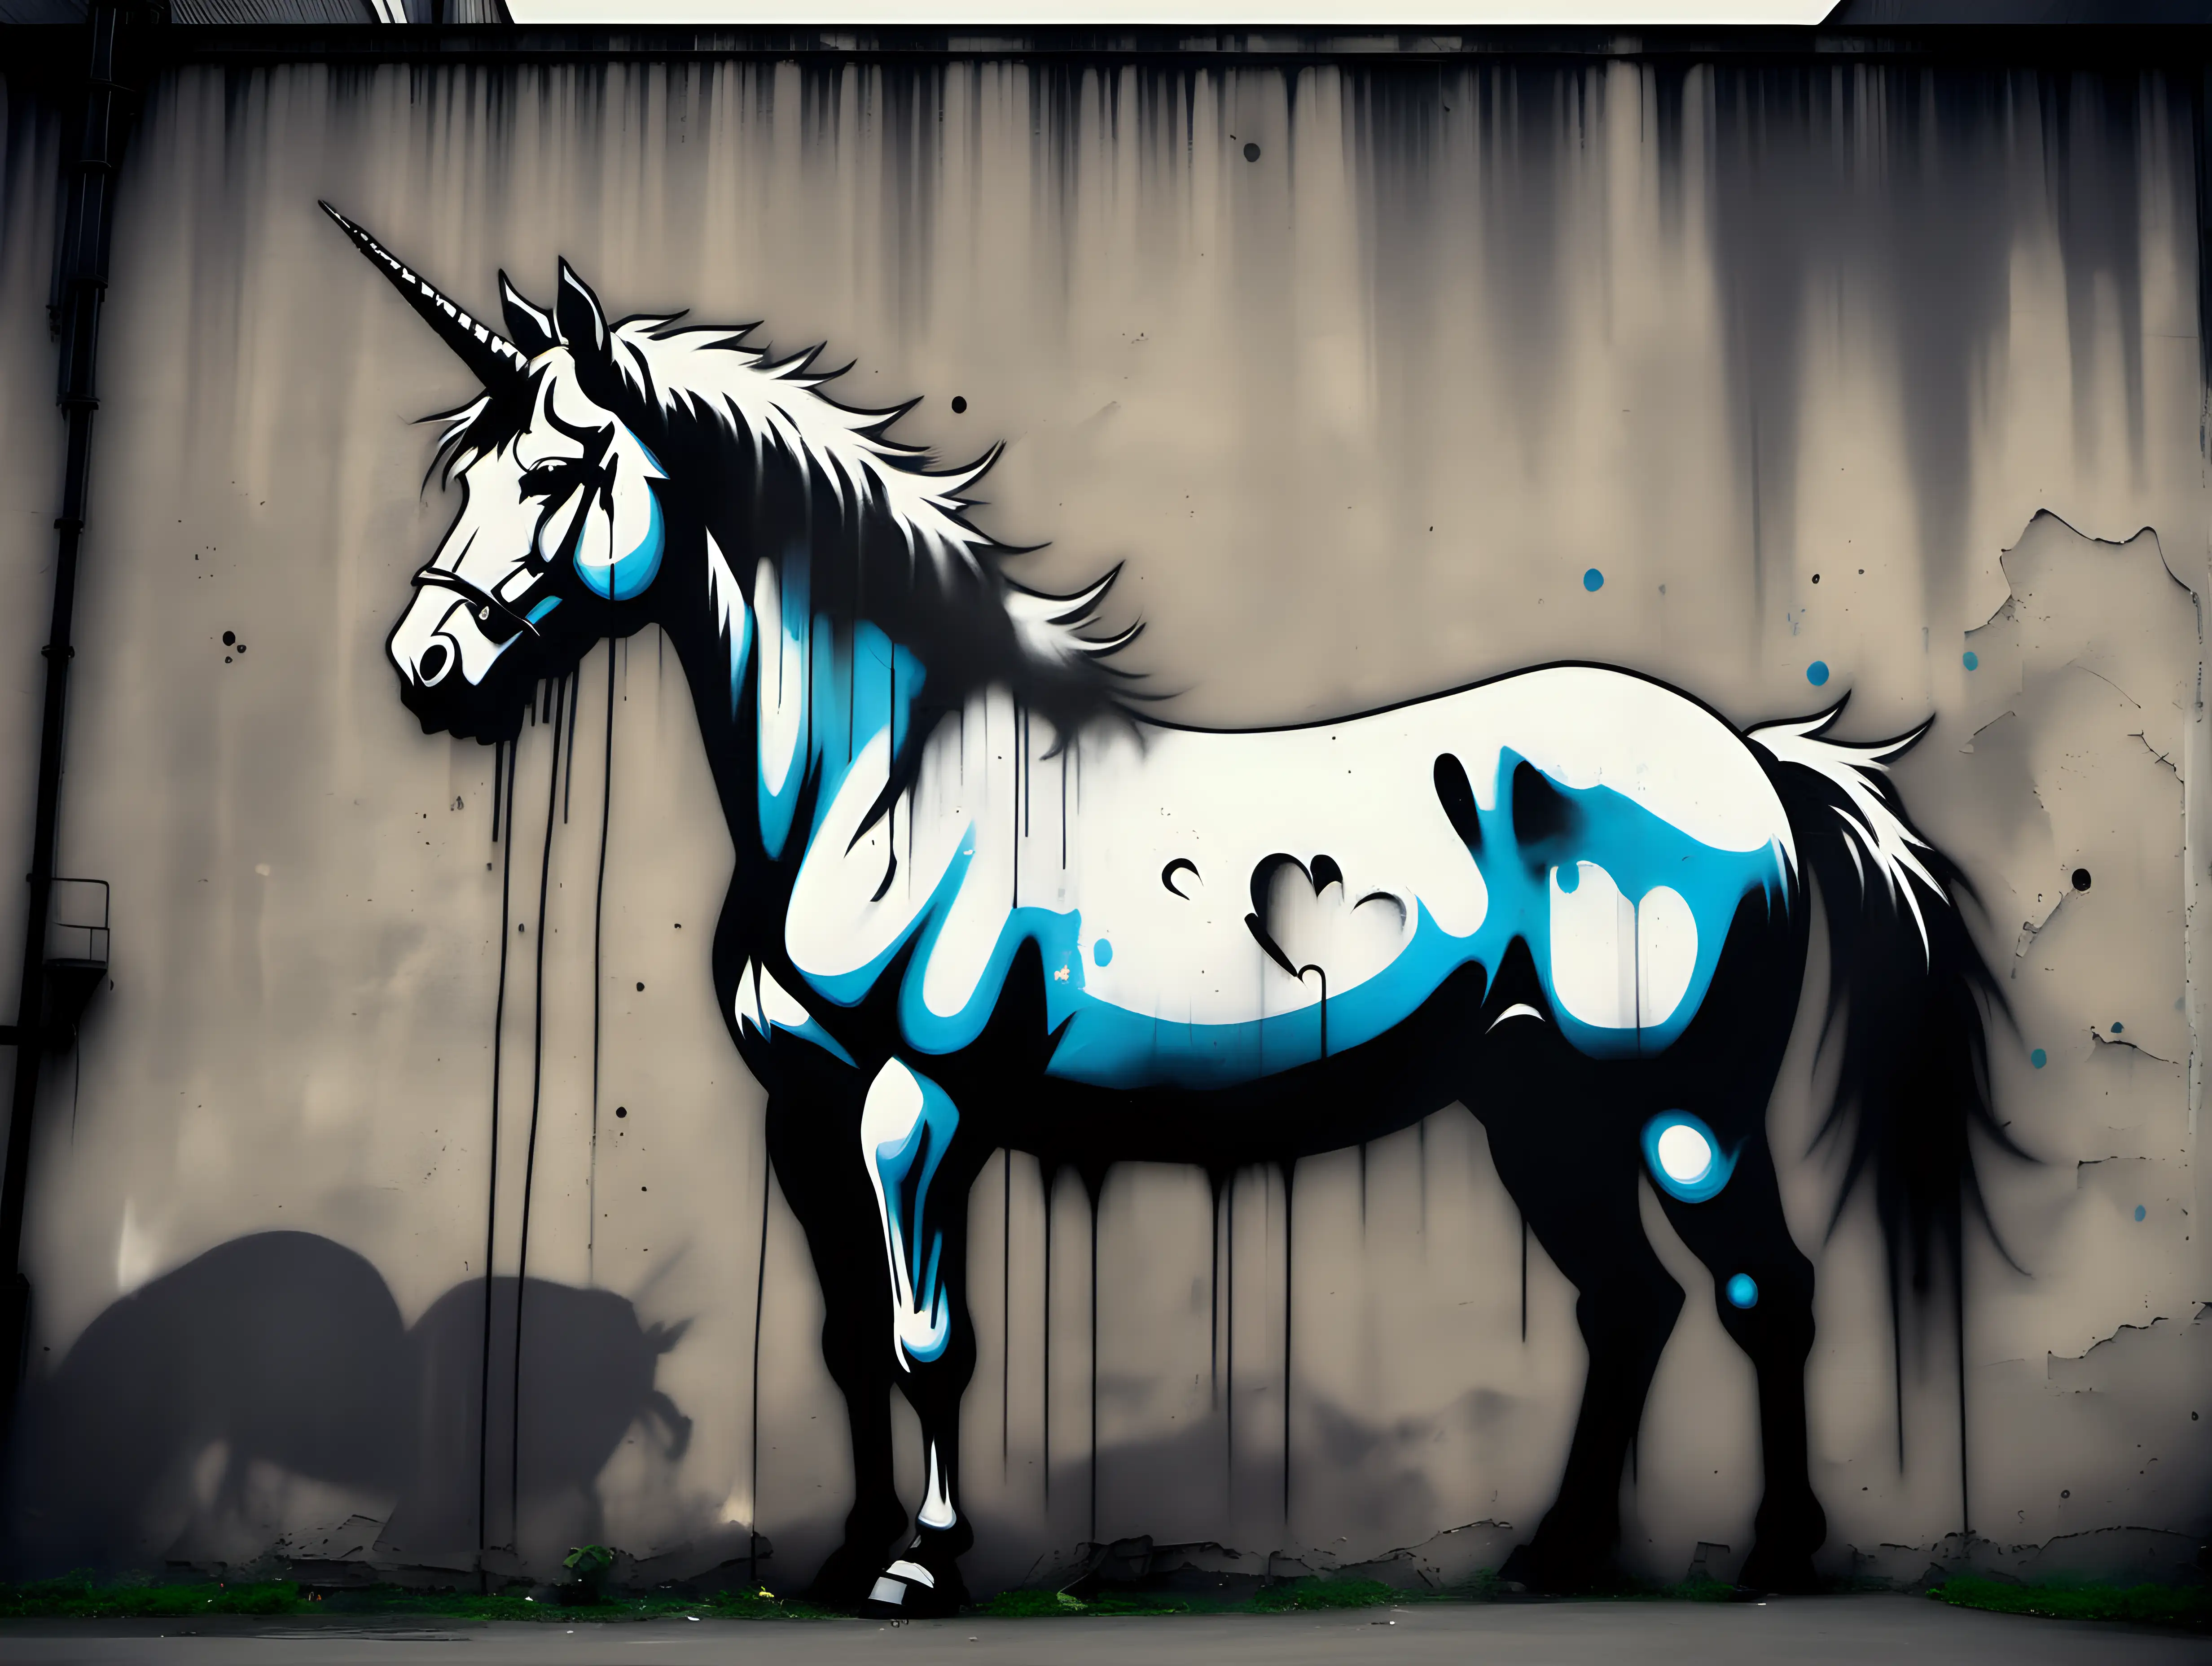 Urban Banksy Street Art Enigmatic Unicorn Mural near Steam Factory